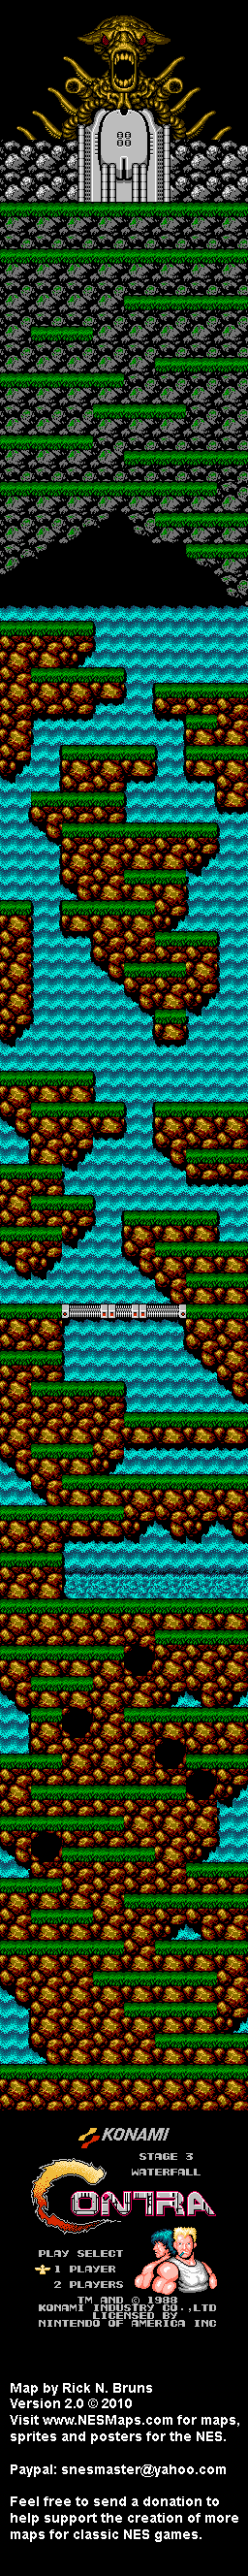 Contra - Stage 3 - Nintendo NES Map BG